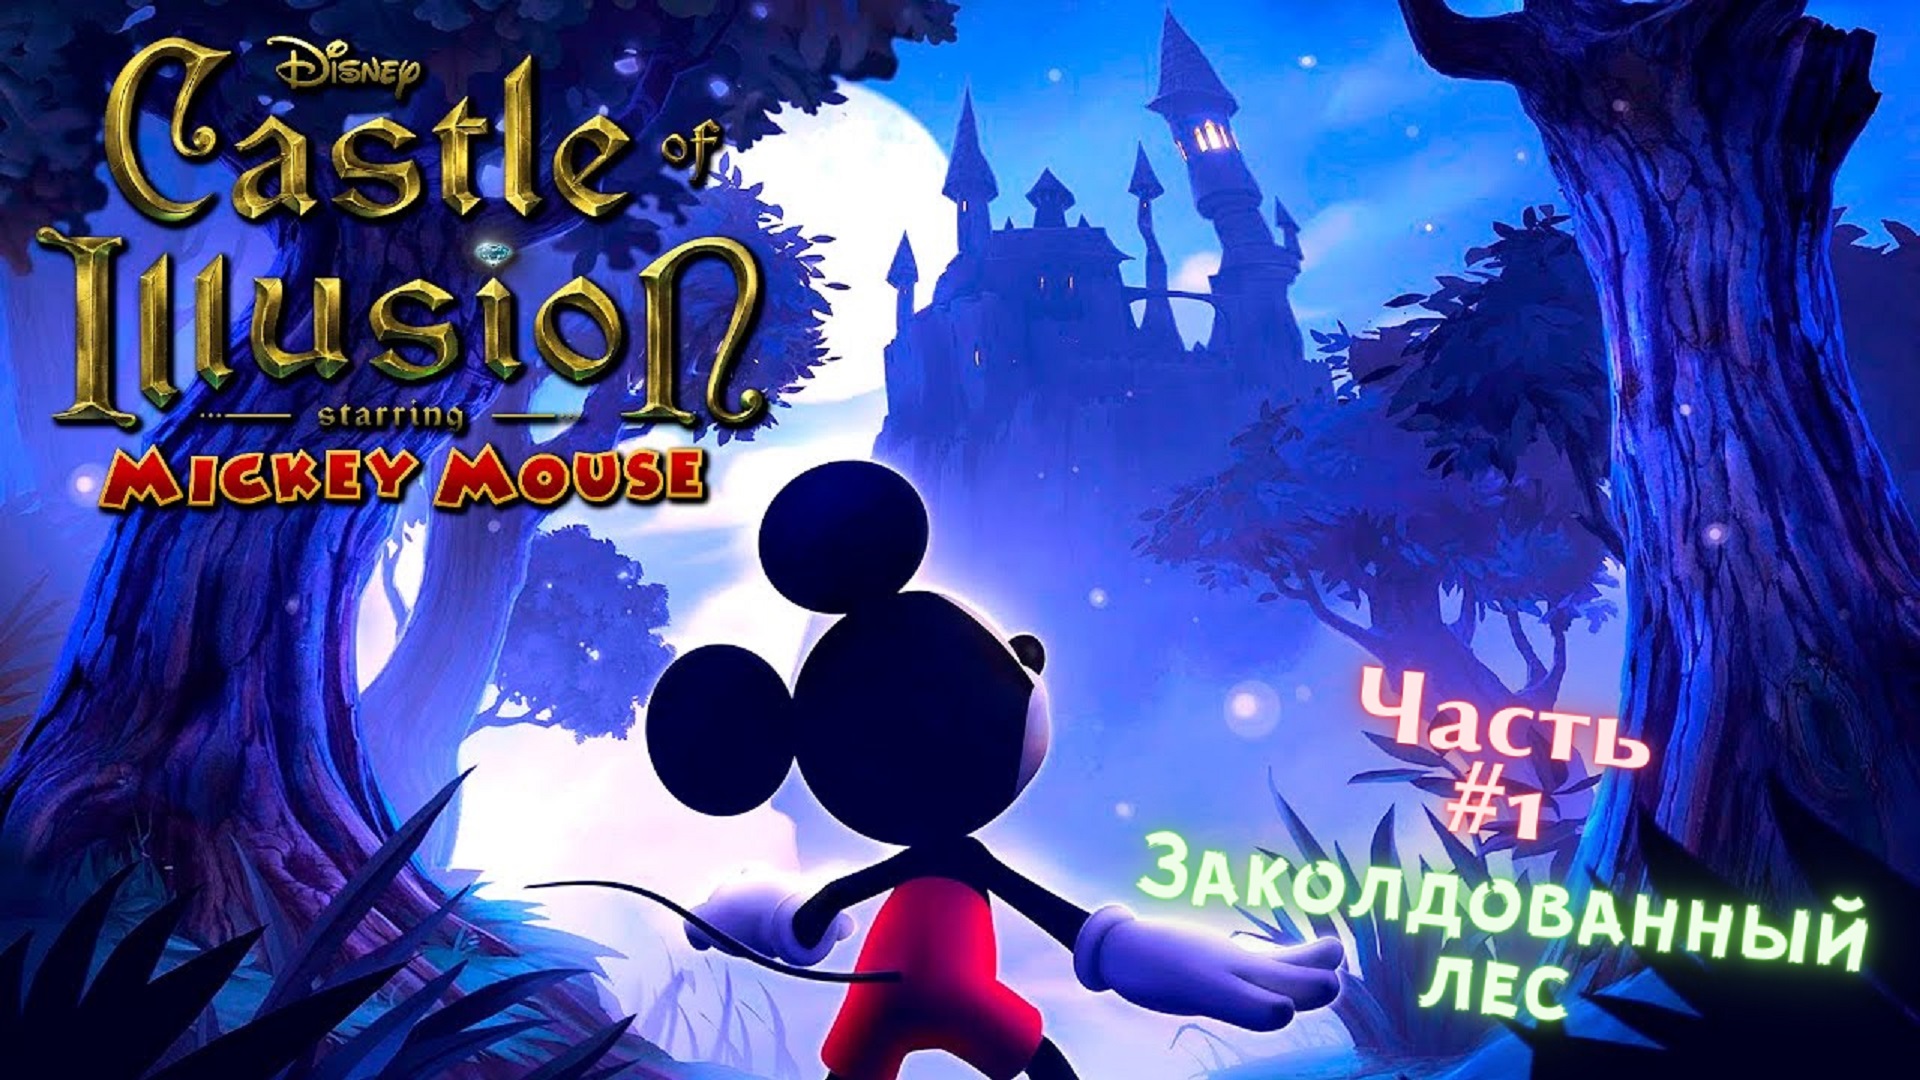 ?Castle of Illusion Starring Micky Mouse?Заколдованный лес?Прохождение на Русском языке #1